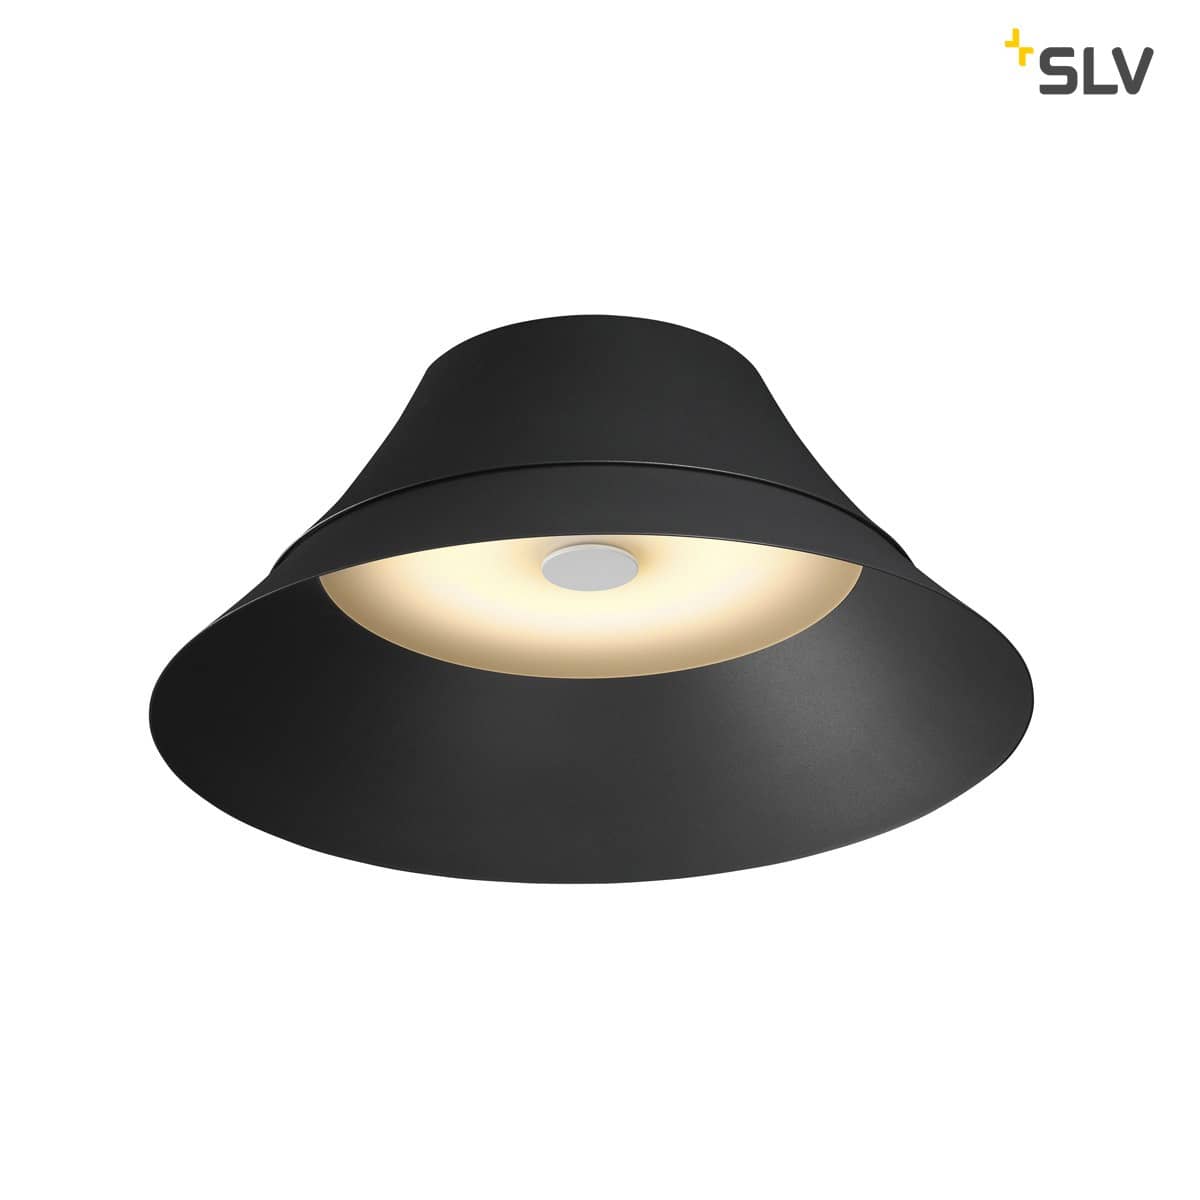 SLV 1000437 BATO 45 CW LED Indoor Deckenaufbauleuchte schwarz LED 2700K, Erkelenz